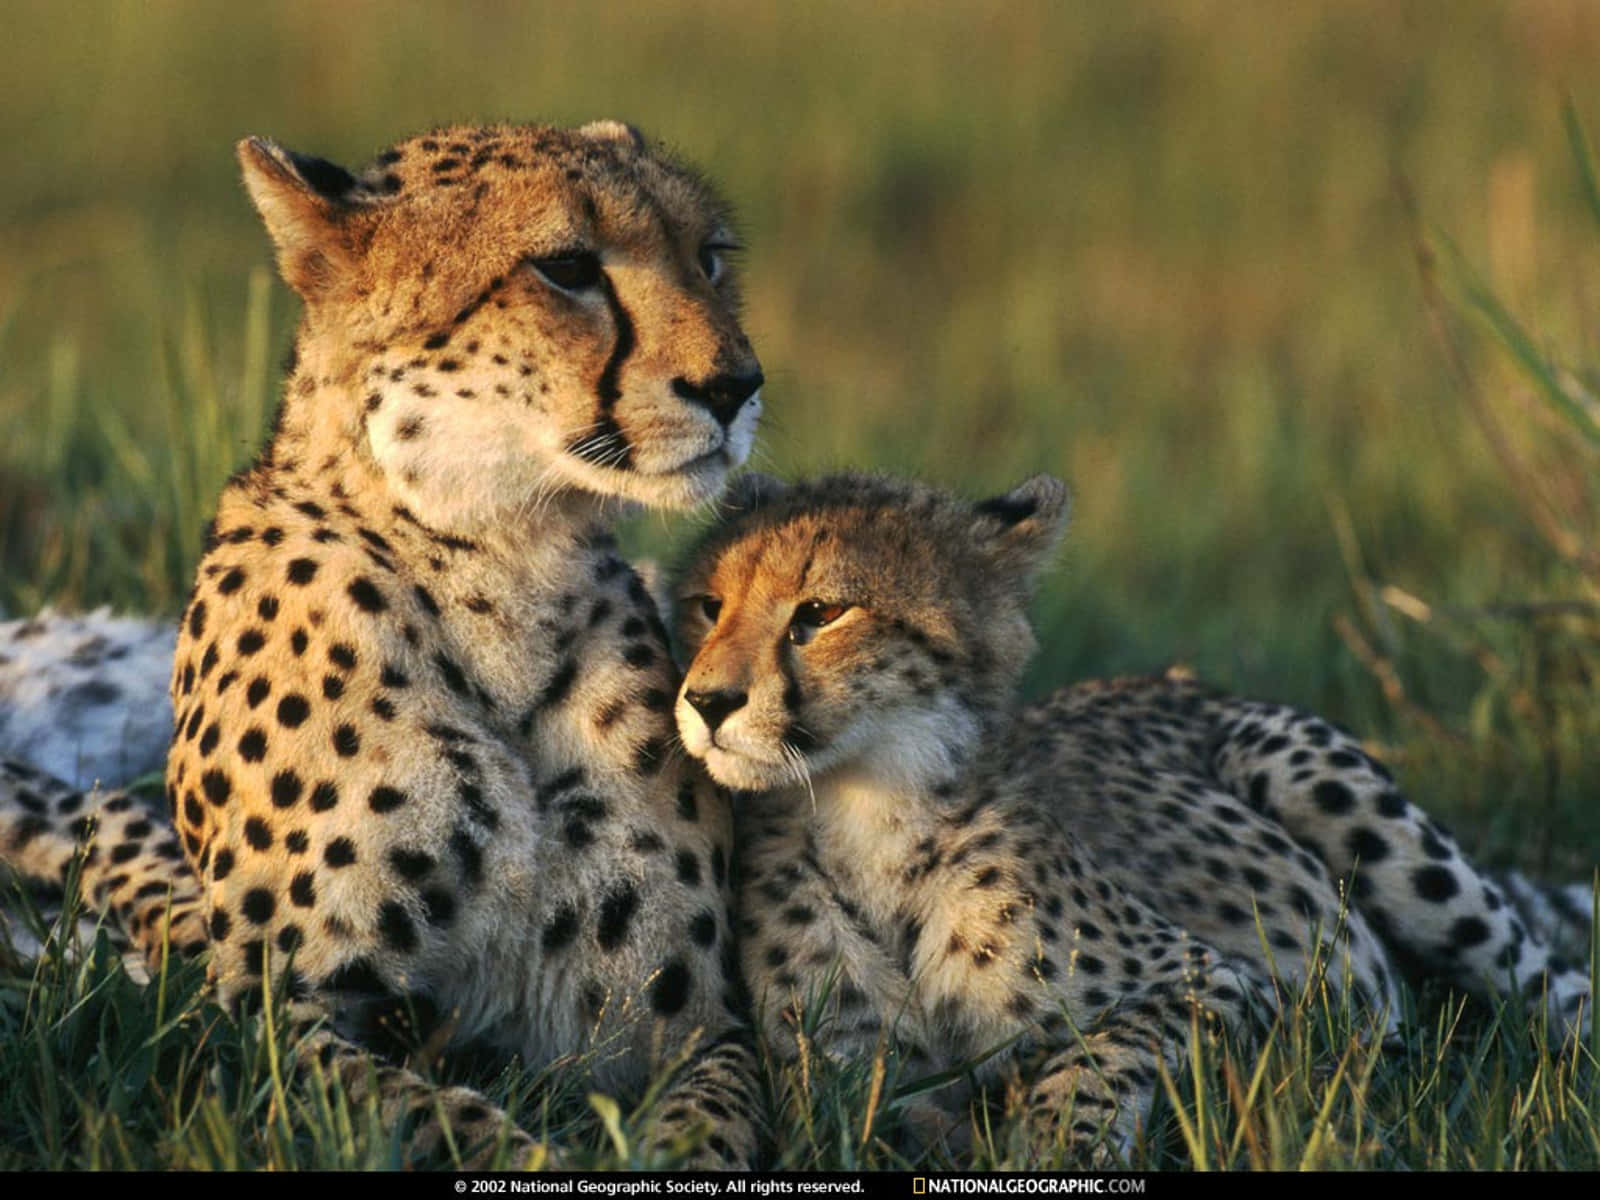 Adorably Playful - A Baby Cheetah Wallpaper